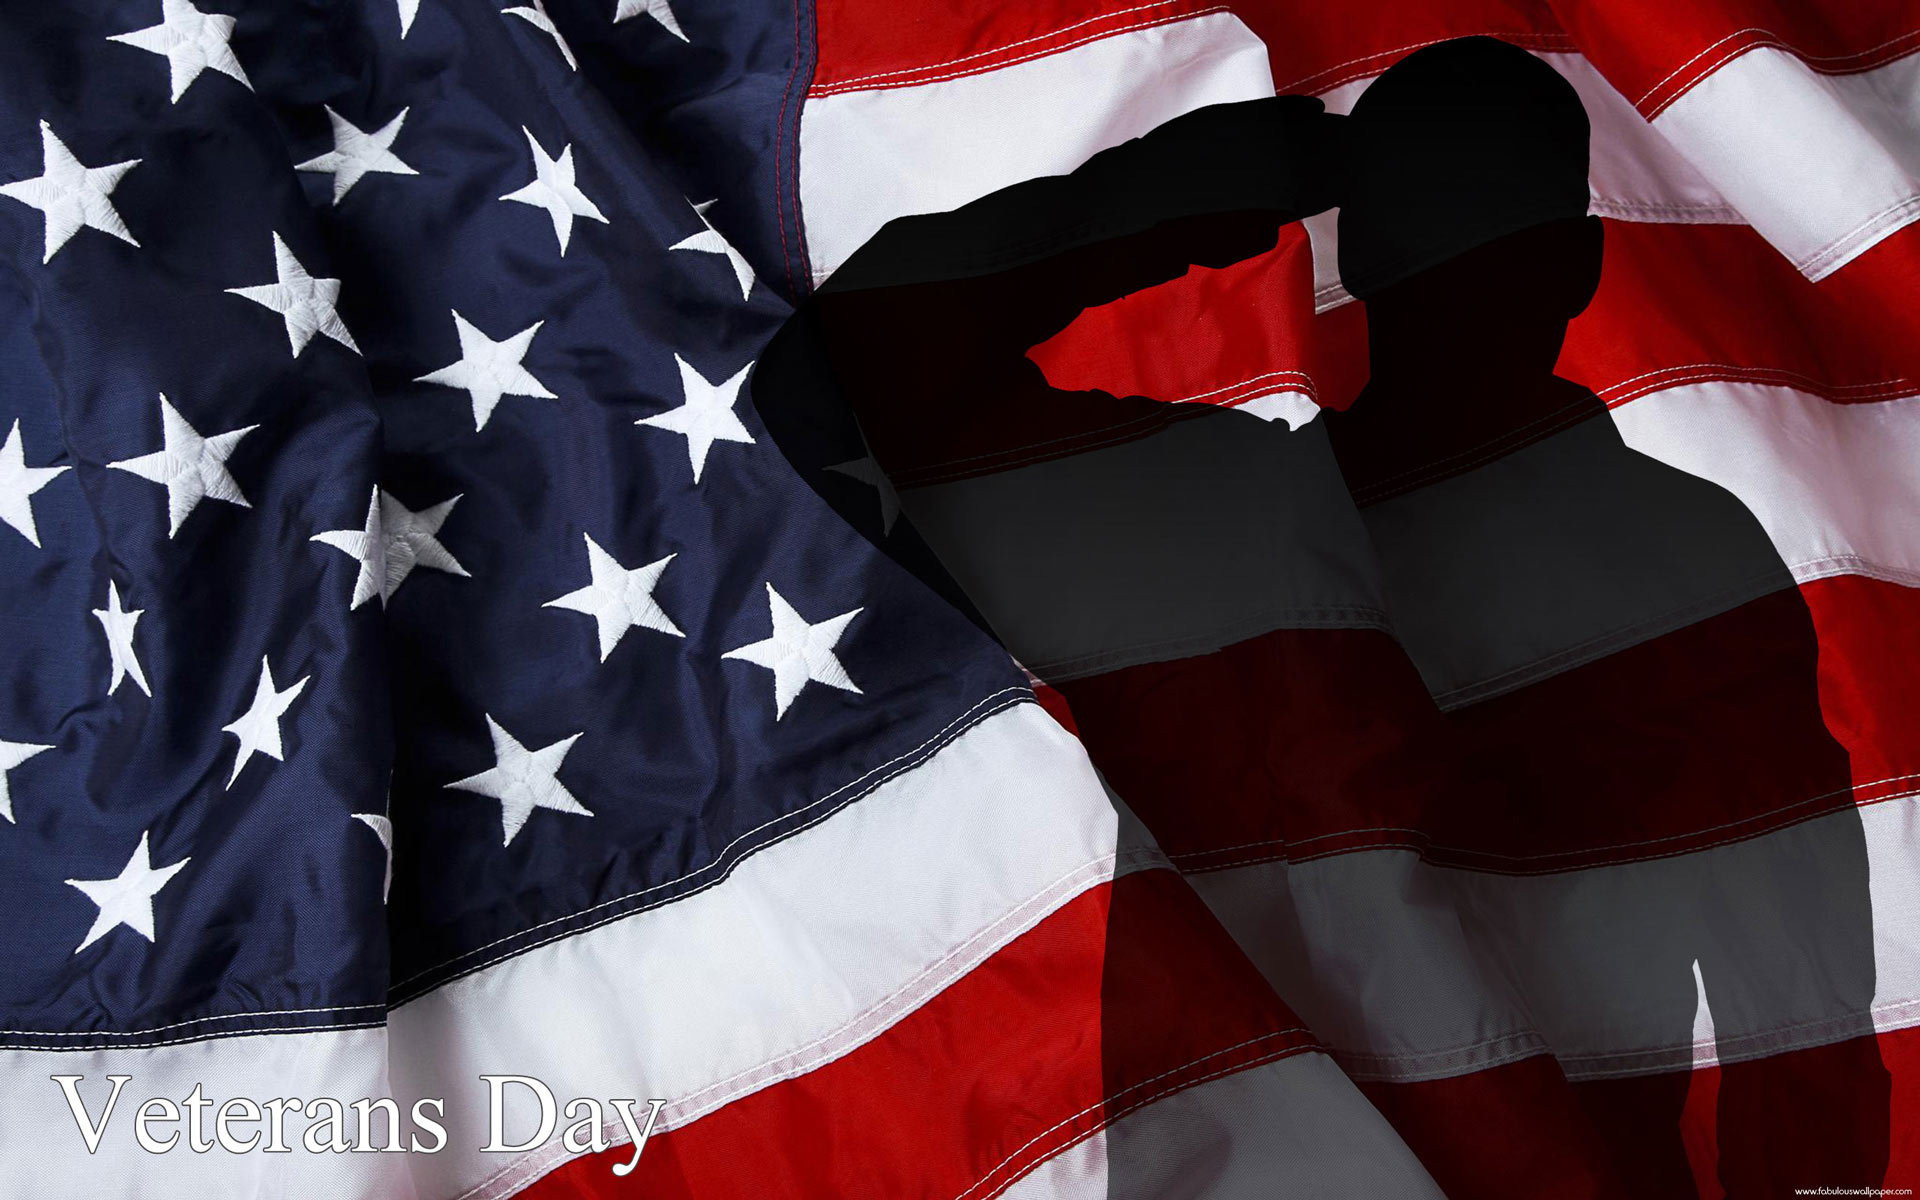 States Veterans Day Puter Desktop Wallpaper Pictures Image